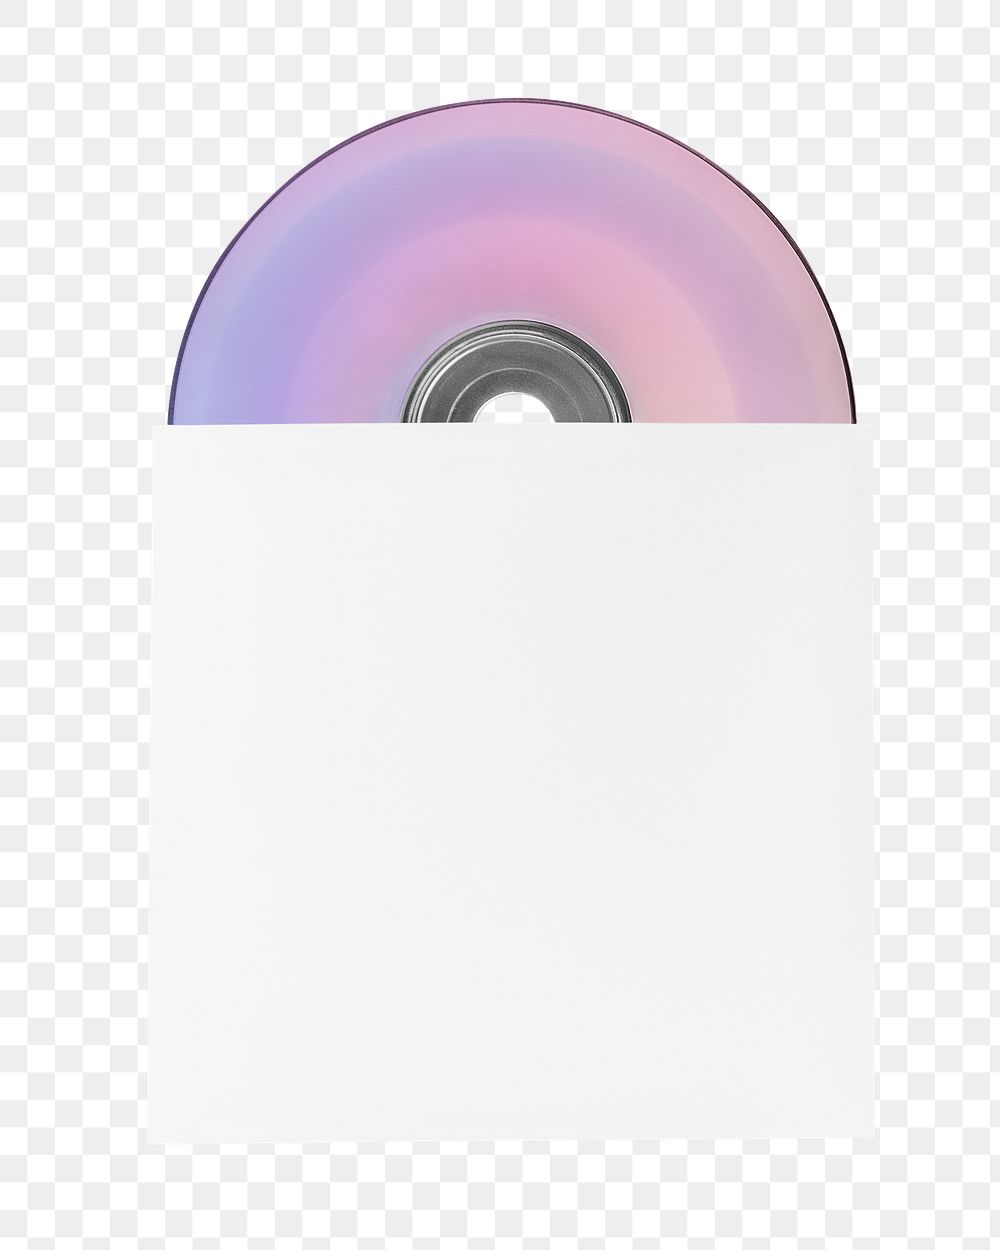 CD album cover png, transparent design